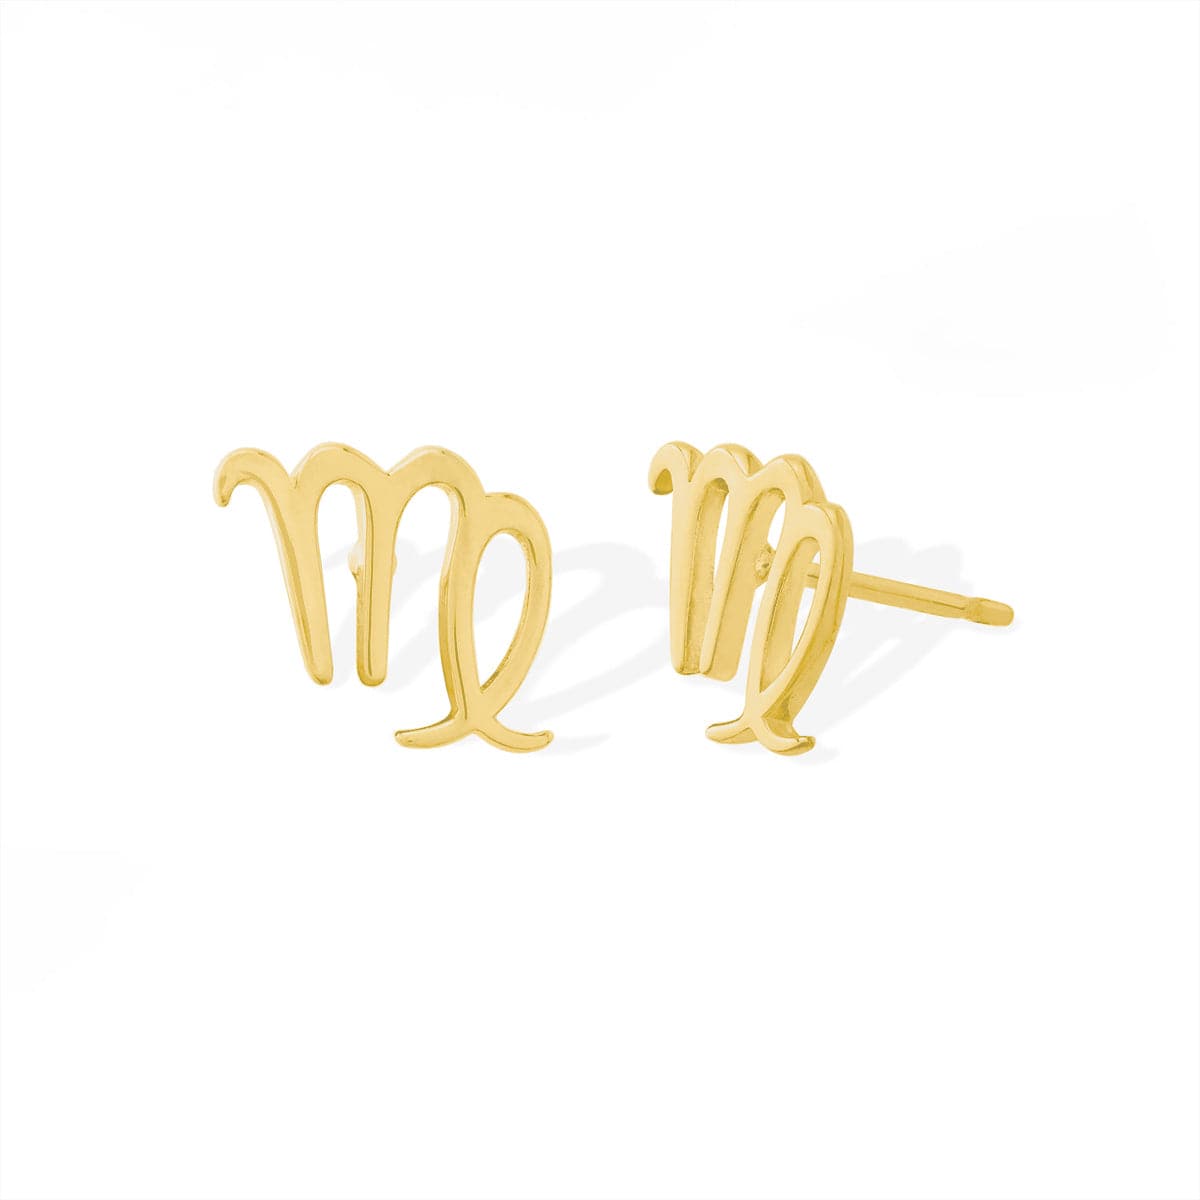 Boma Jewelry Earrings 14K Gold Plated / Virgo Zodiac Studs